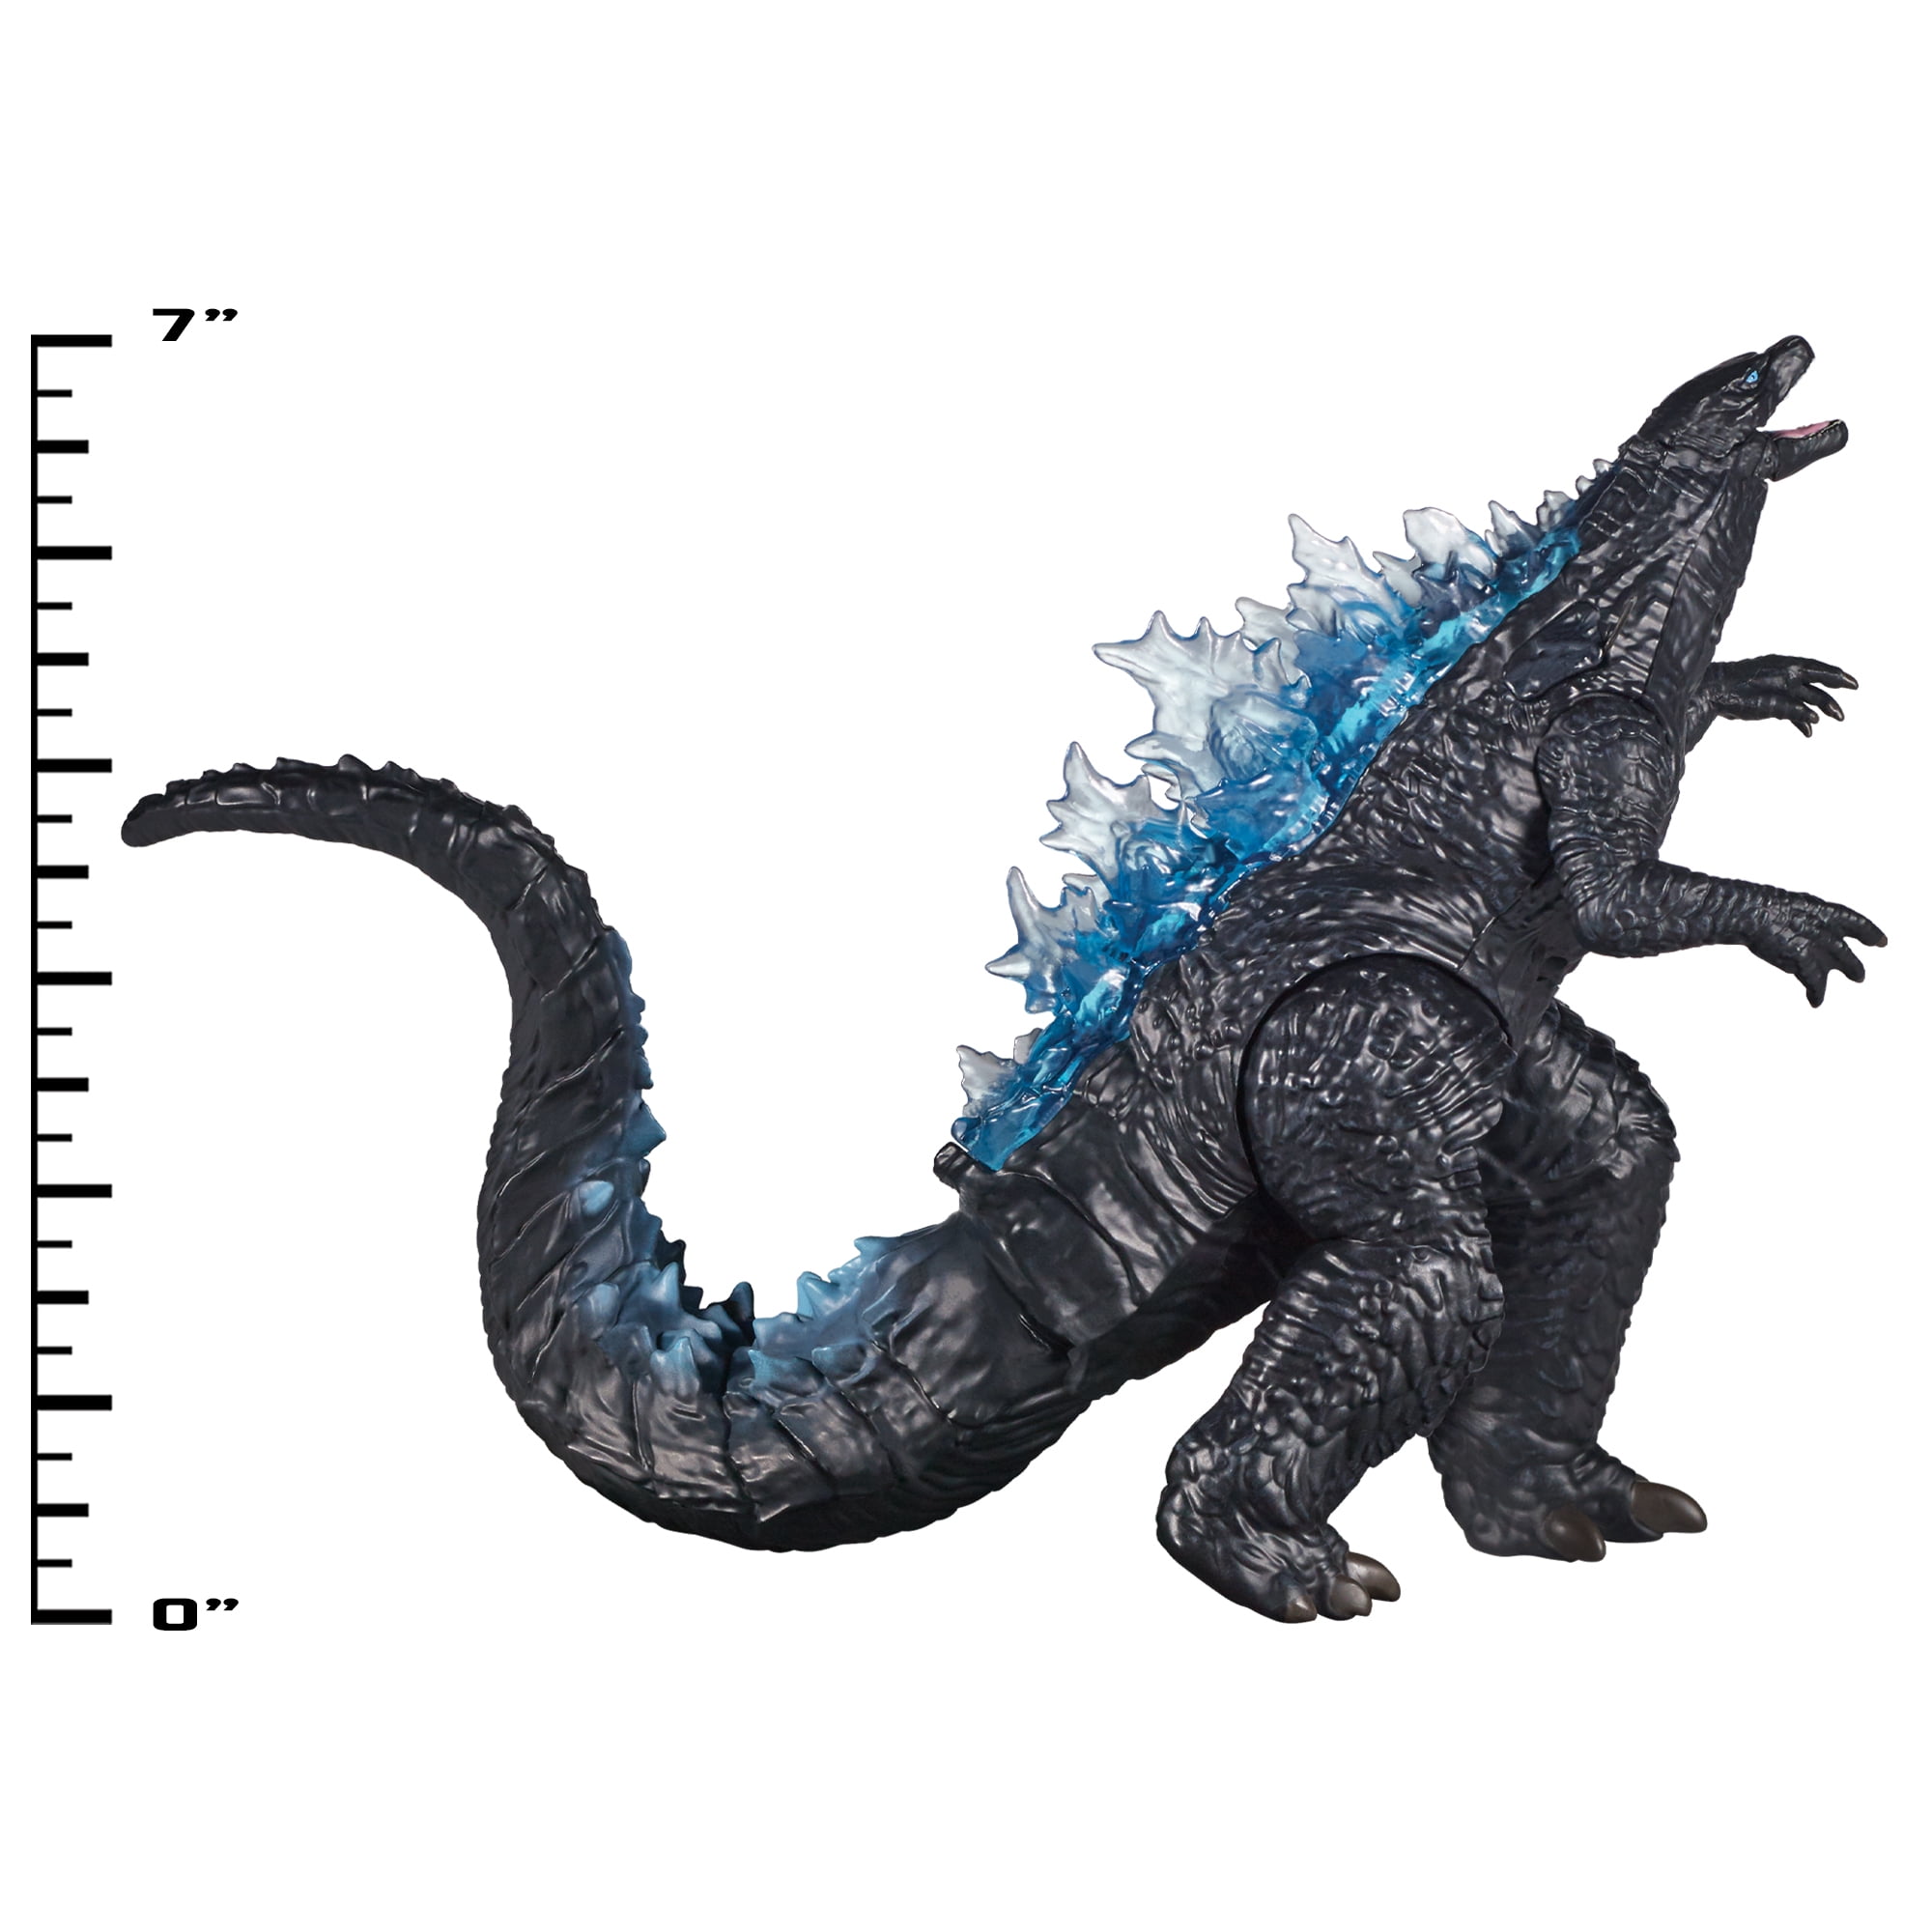 SHIN GODZILLA 6.5" tall Godzilla 2016 Authentic Japan Bandai w/tag 